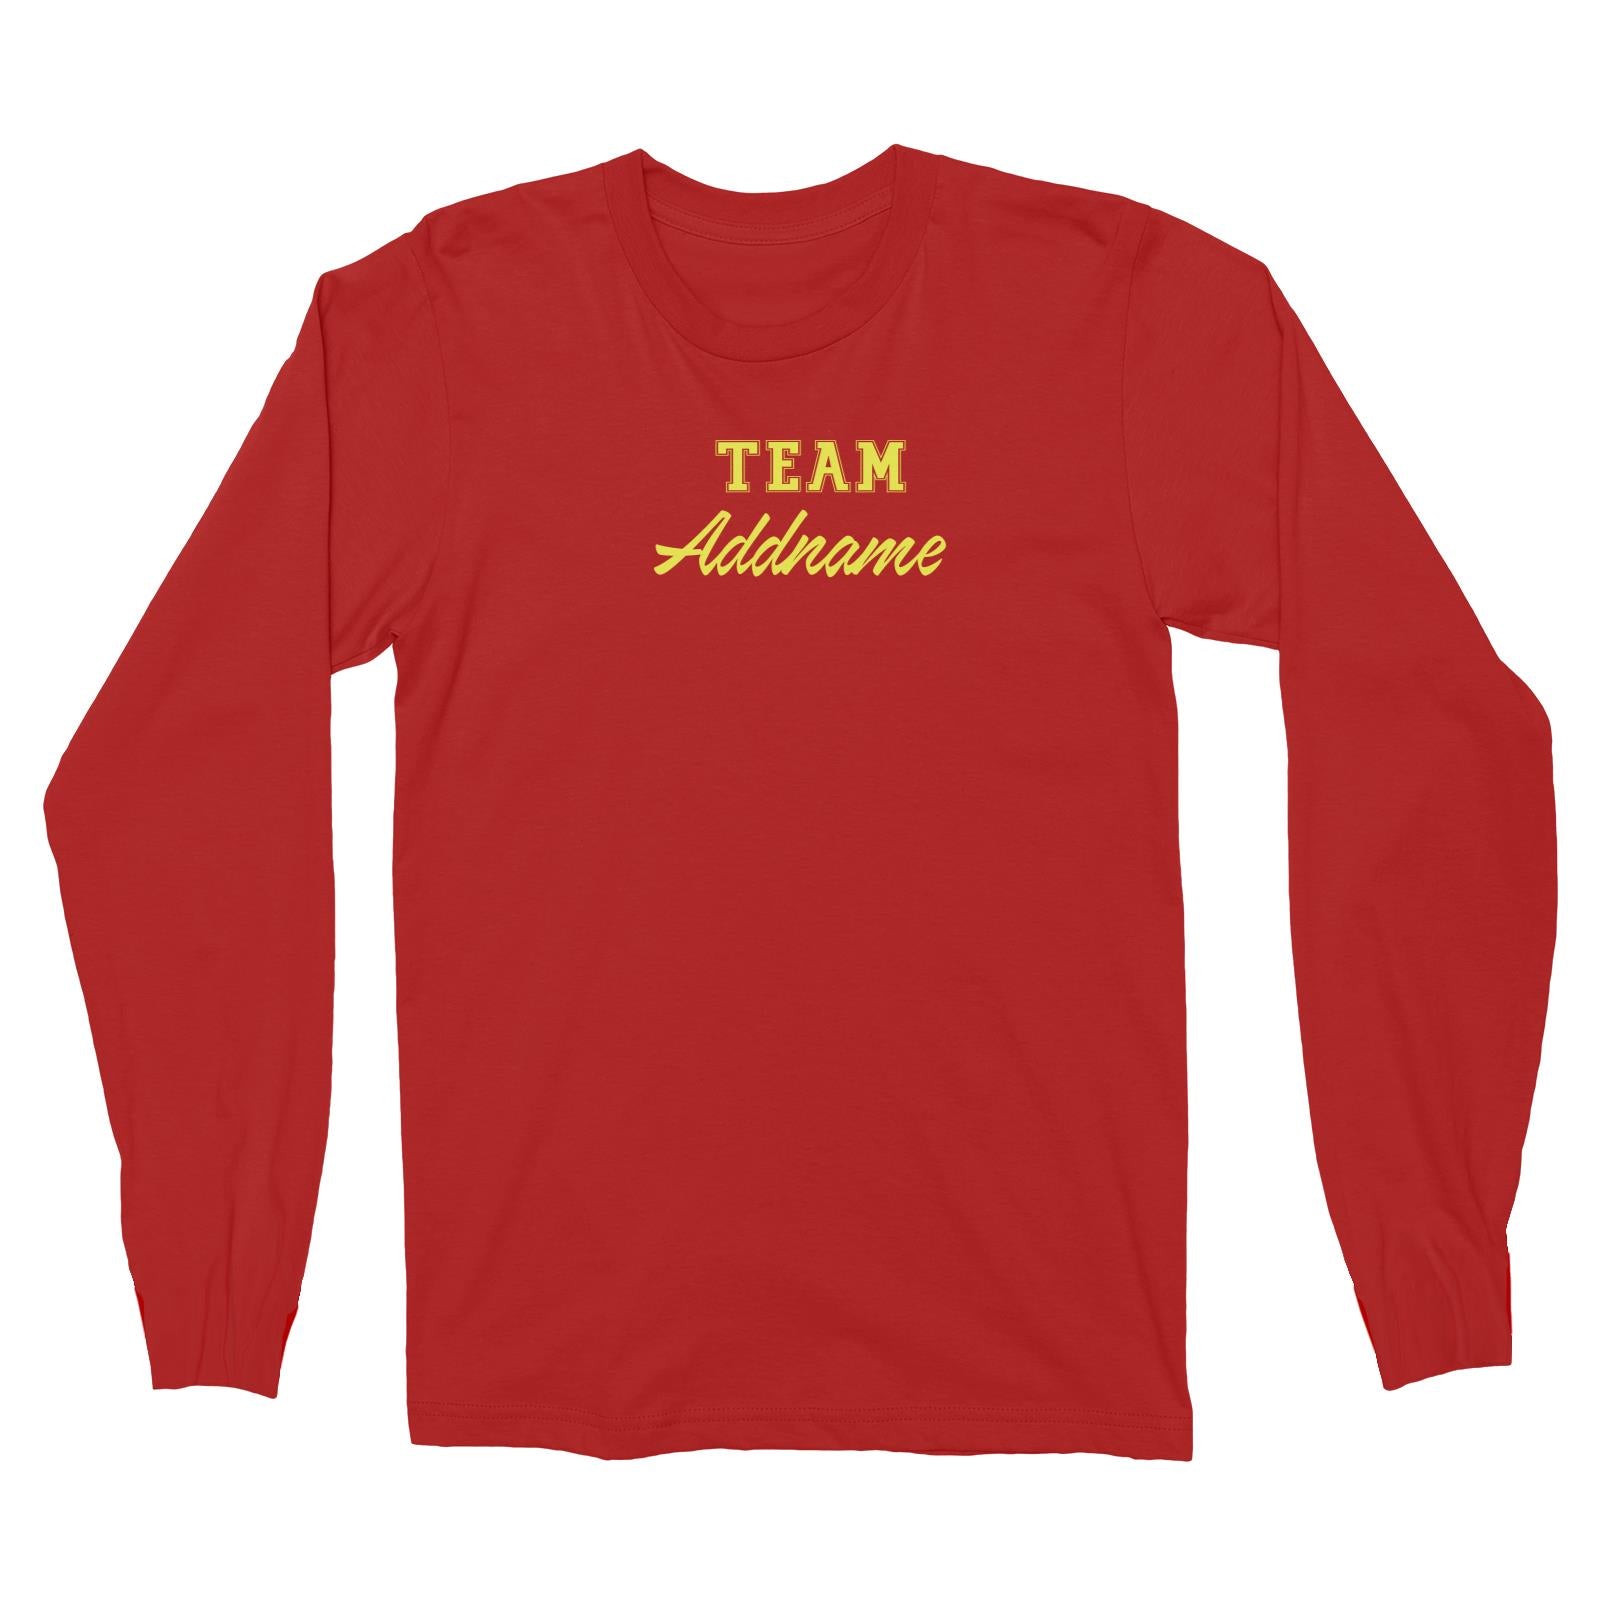 Team Family Addname Long Sleeve Unisex T-Shirt